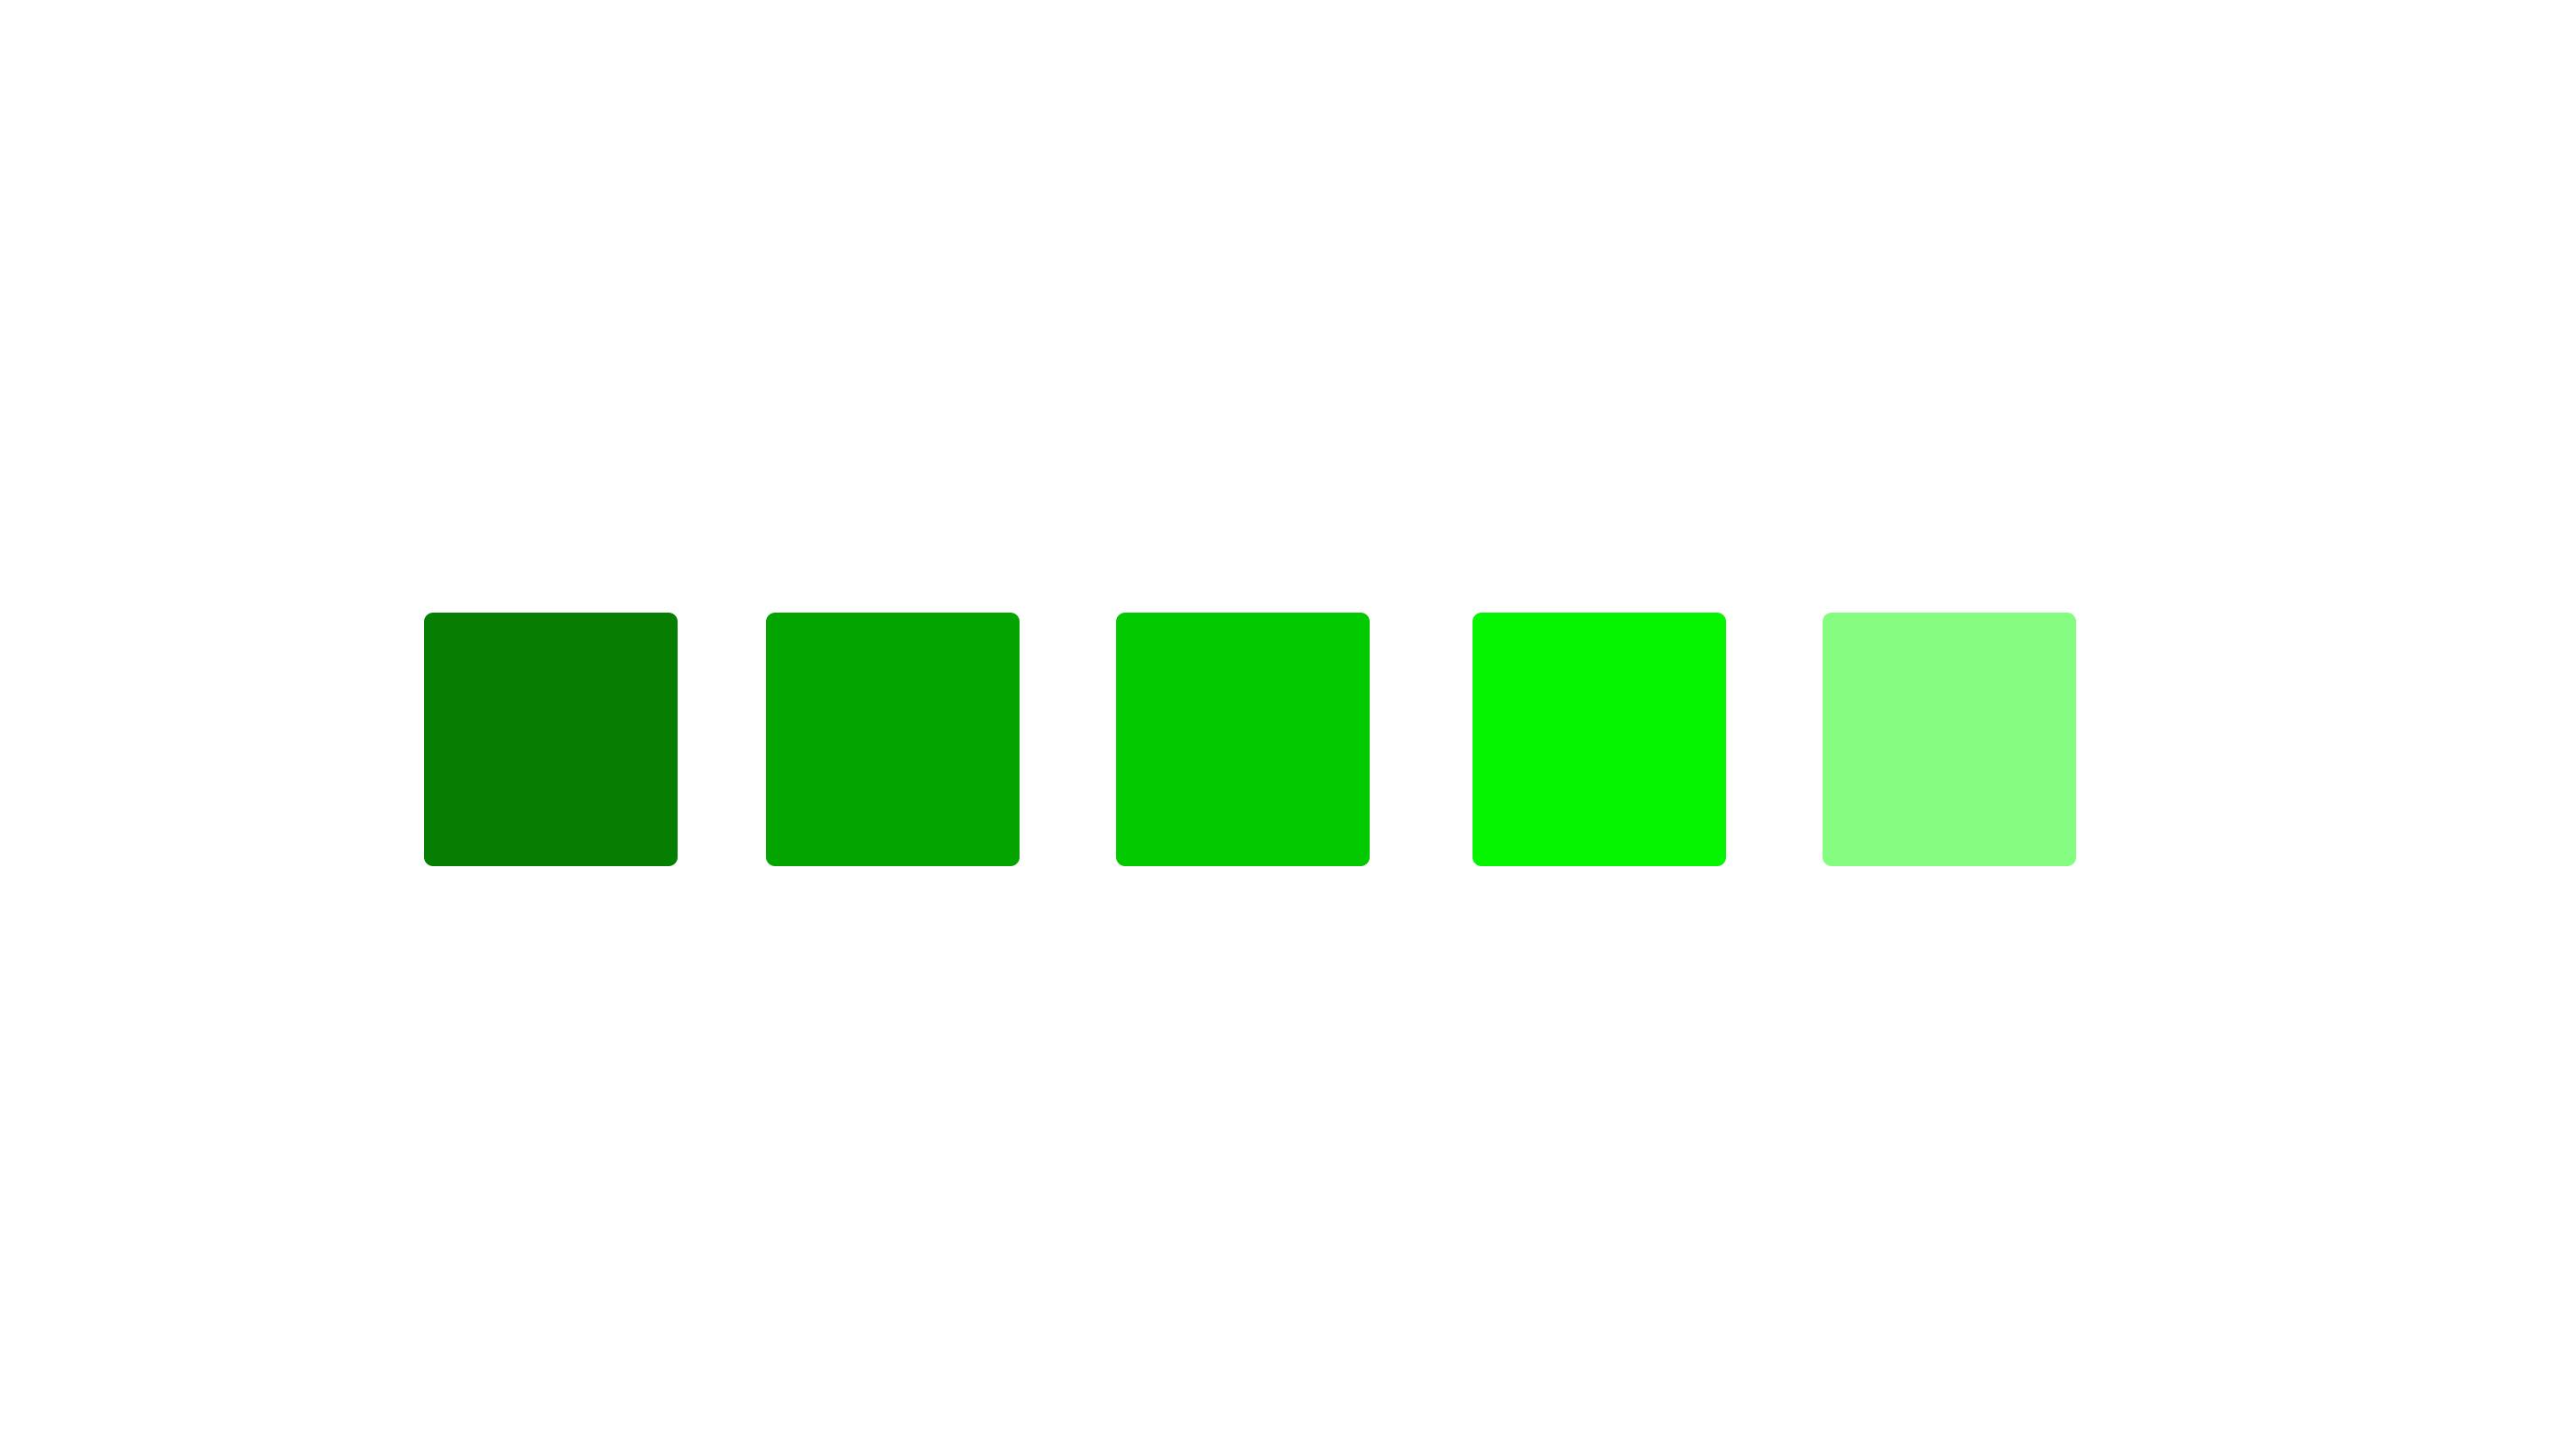 Monochromatic Colour Scheme of the Colour Green